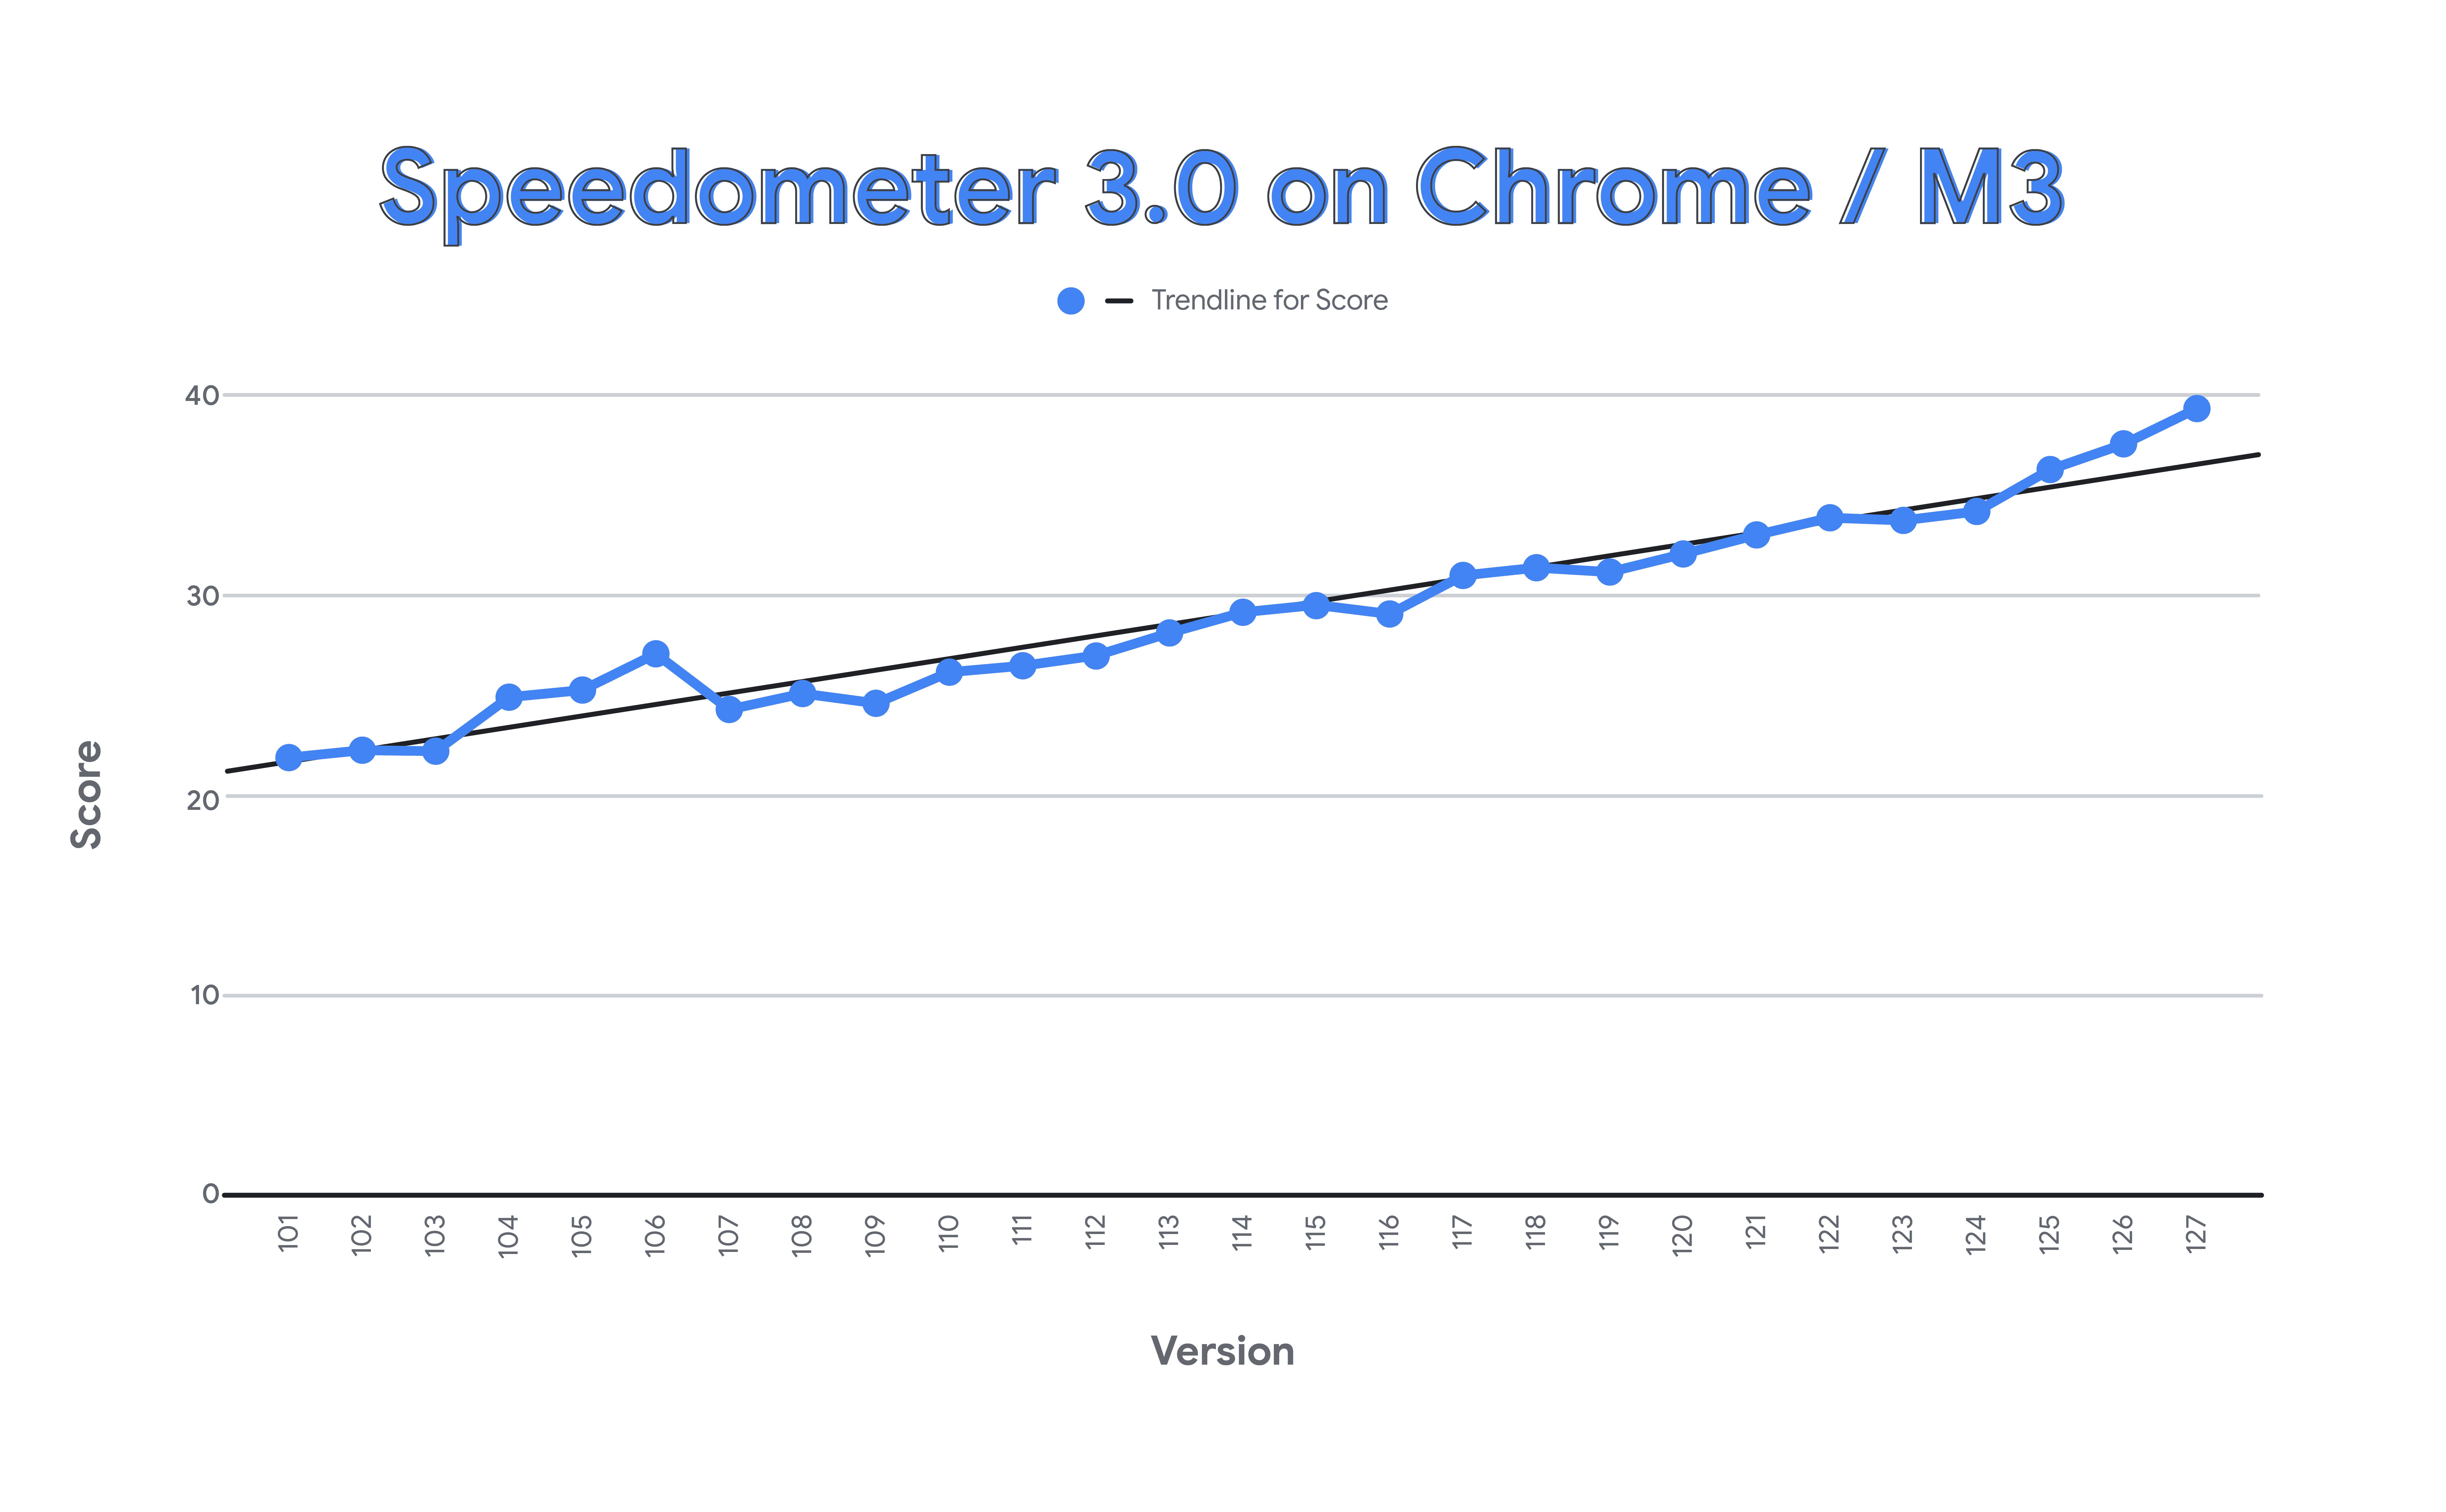 Google Chrome Speedometer 3.0 history

fastest browser